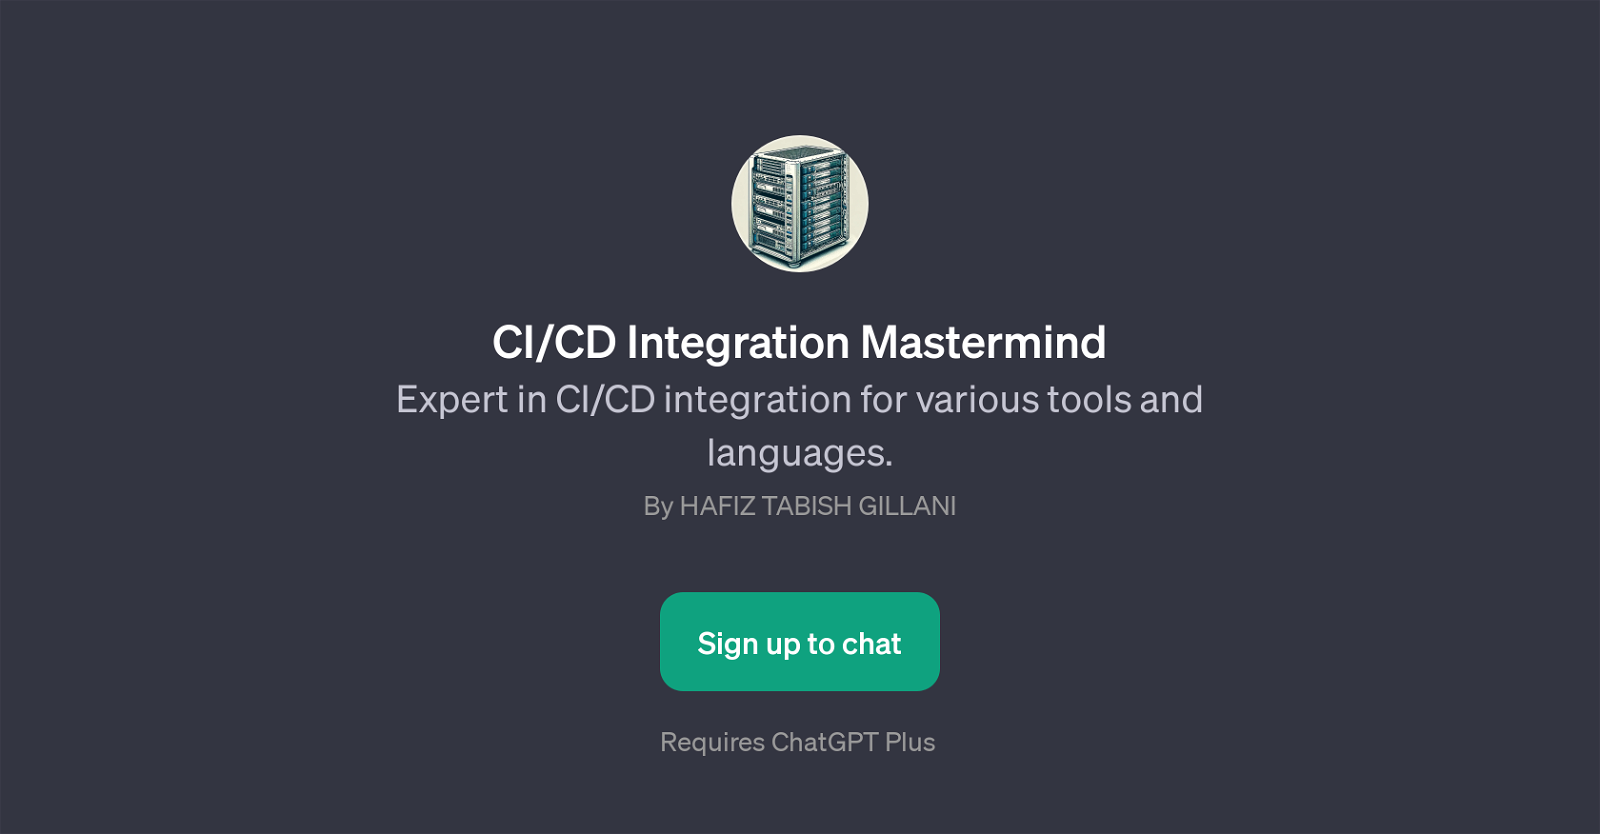 CI/CD Integration Mastermind website